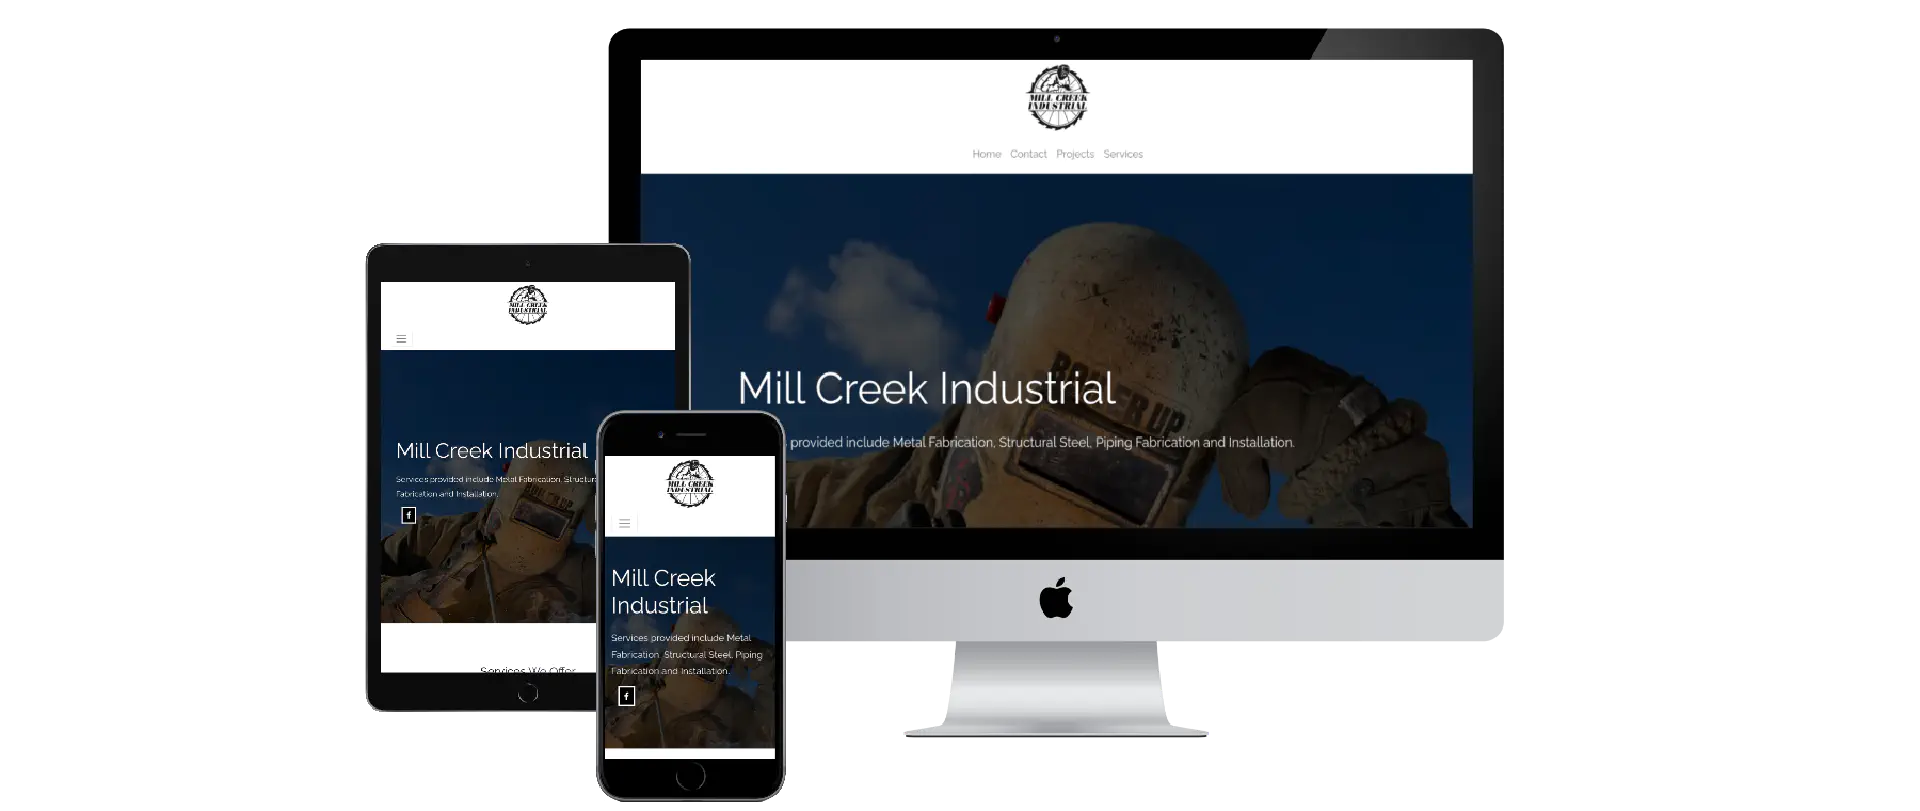 Website desined for Mill Creek Industrial in Wyalusing, PA